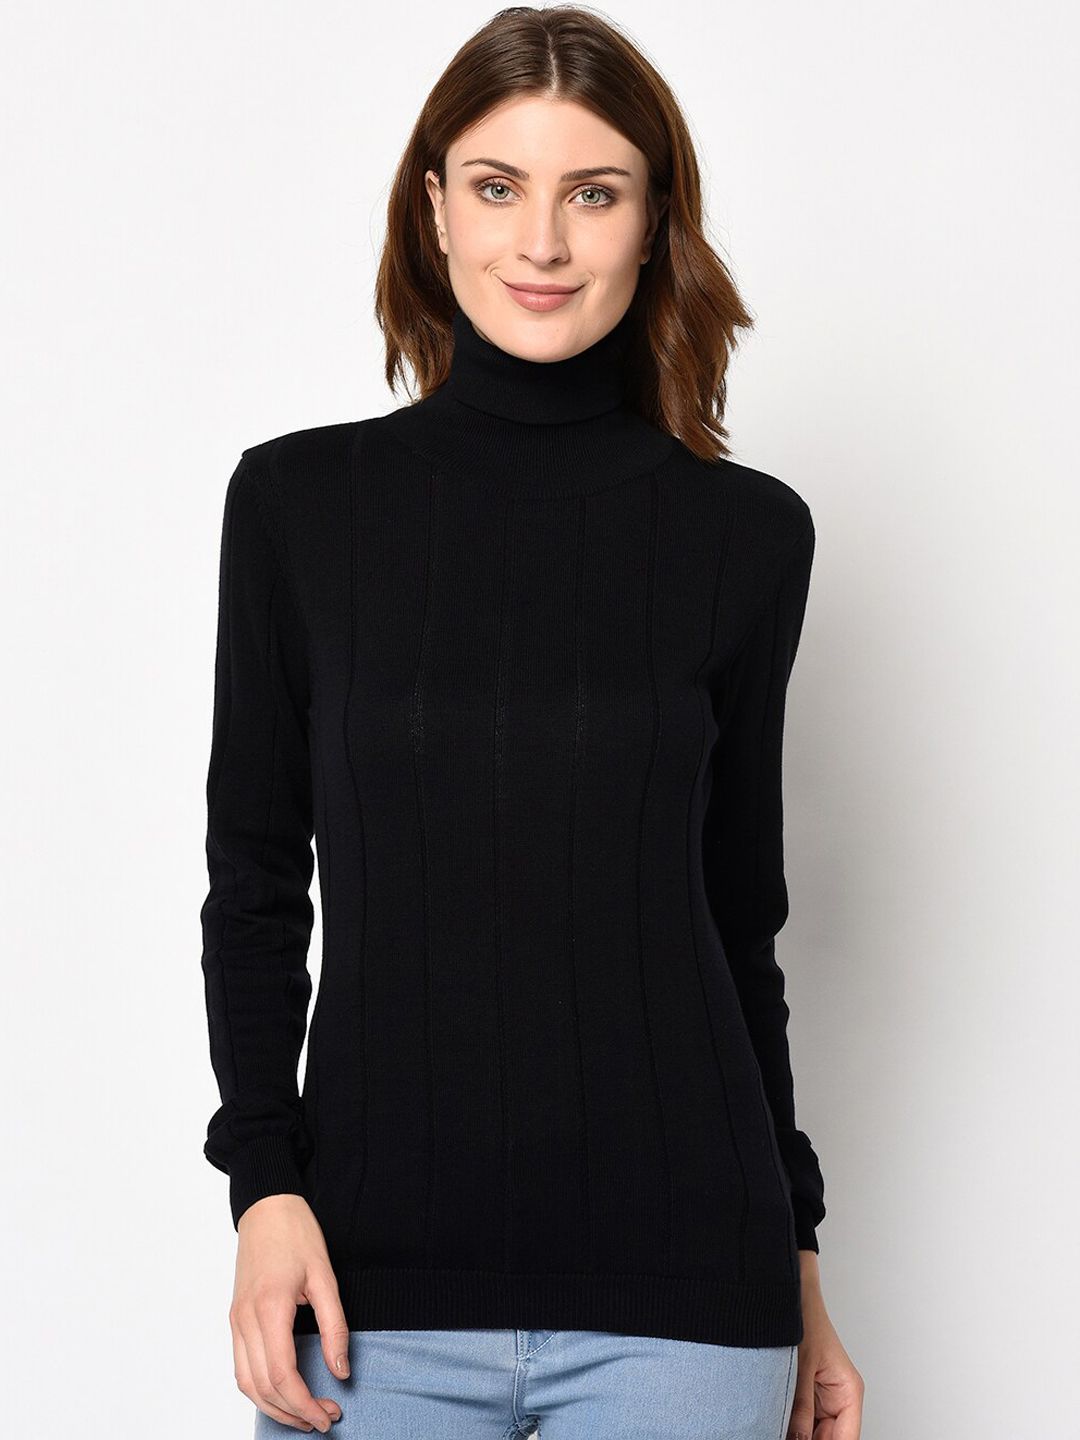 98 Degree North Women Black Striped Sweater Price in India